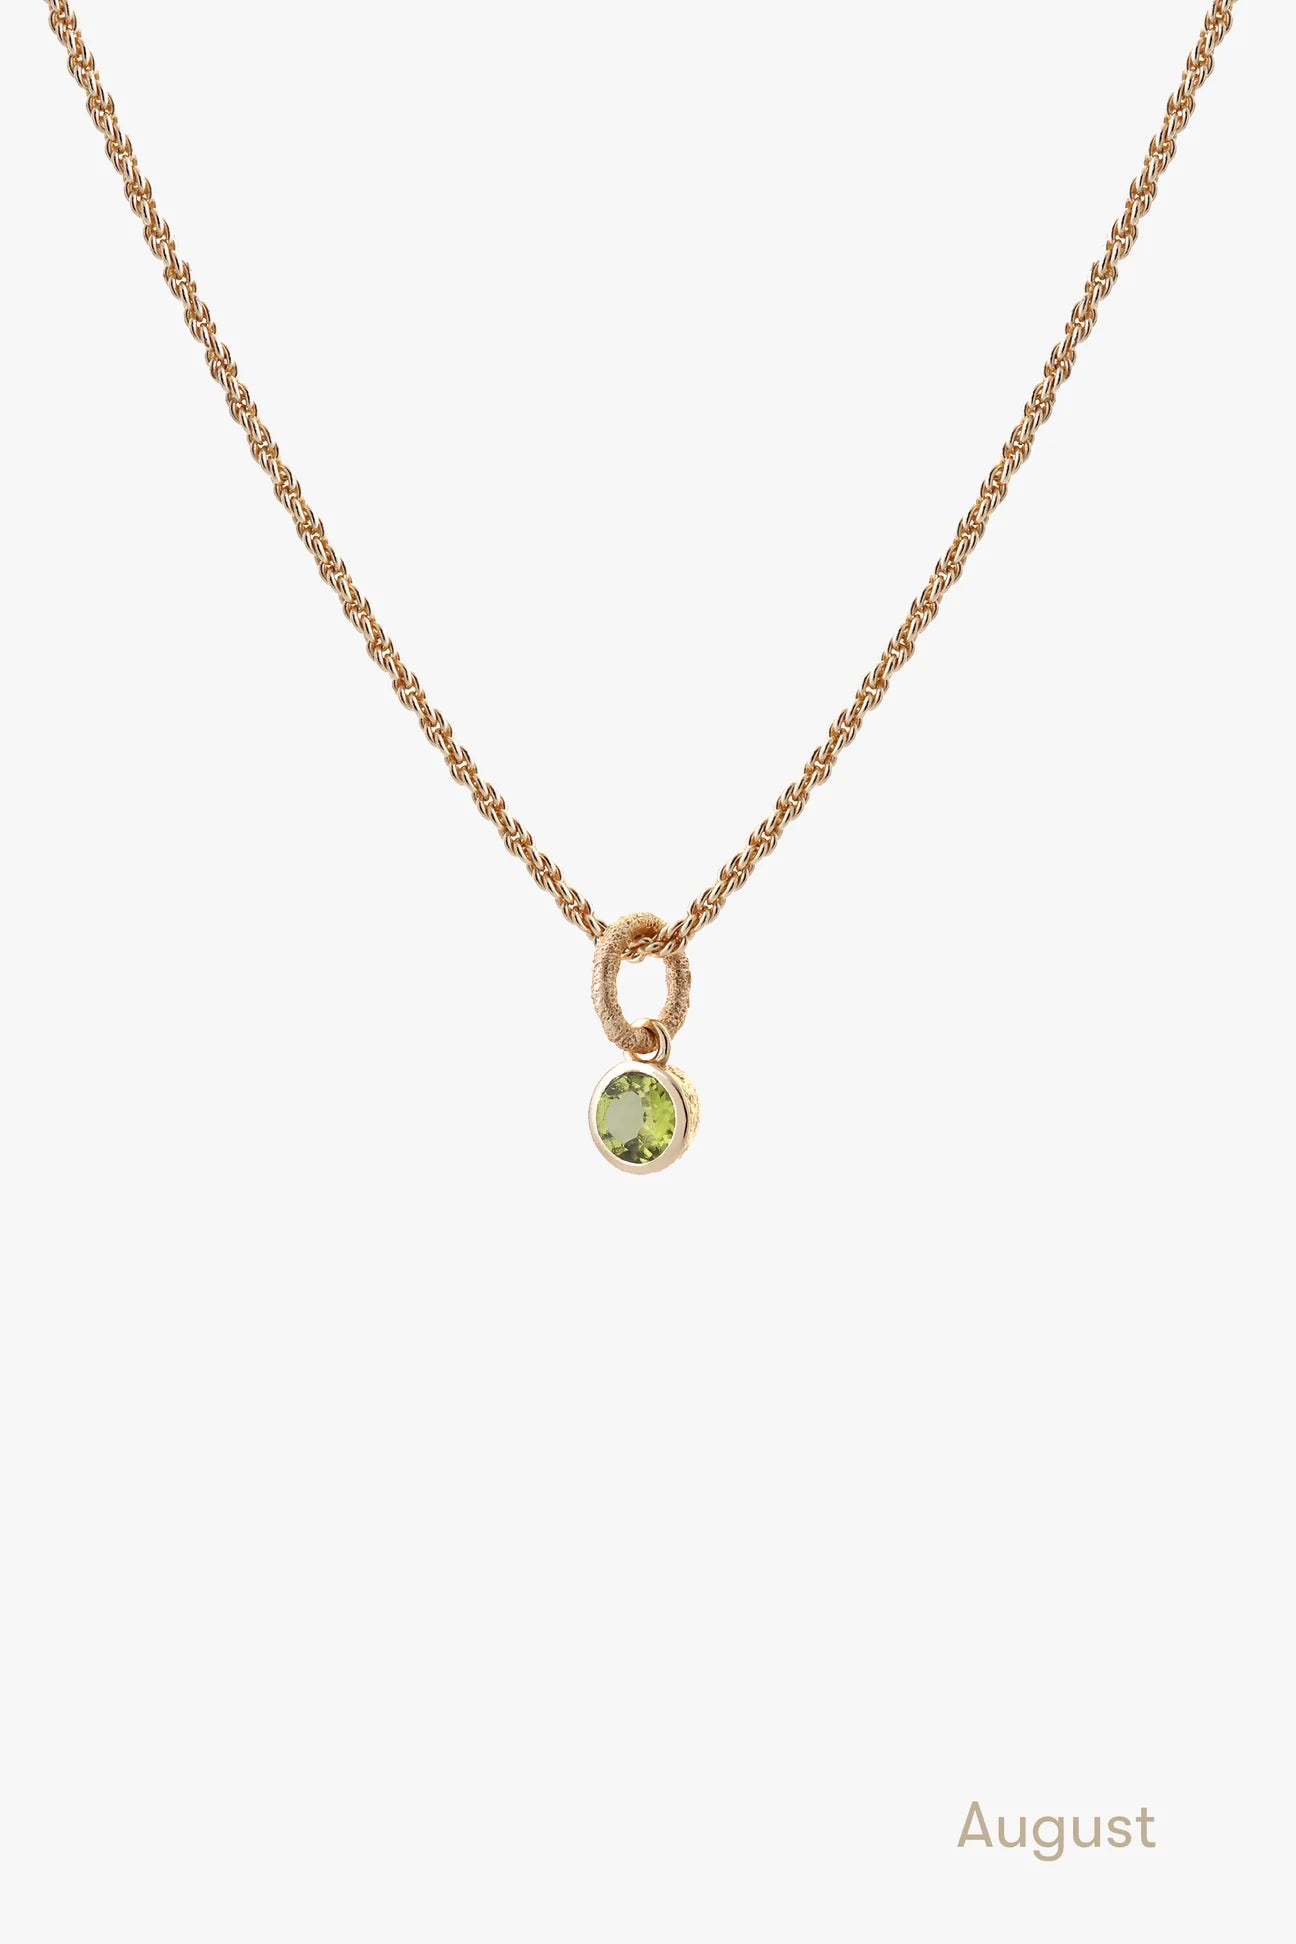 Peridot Birthstone Necklace Gold